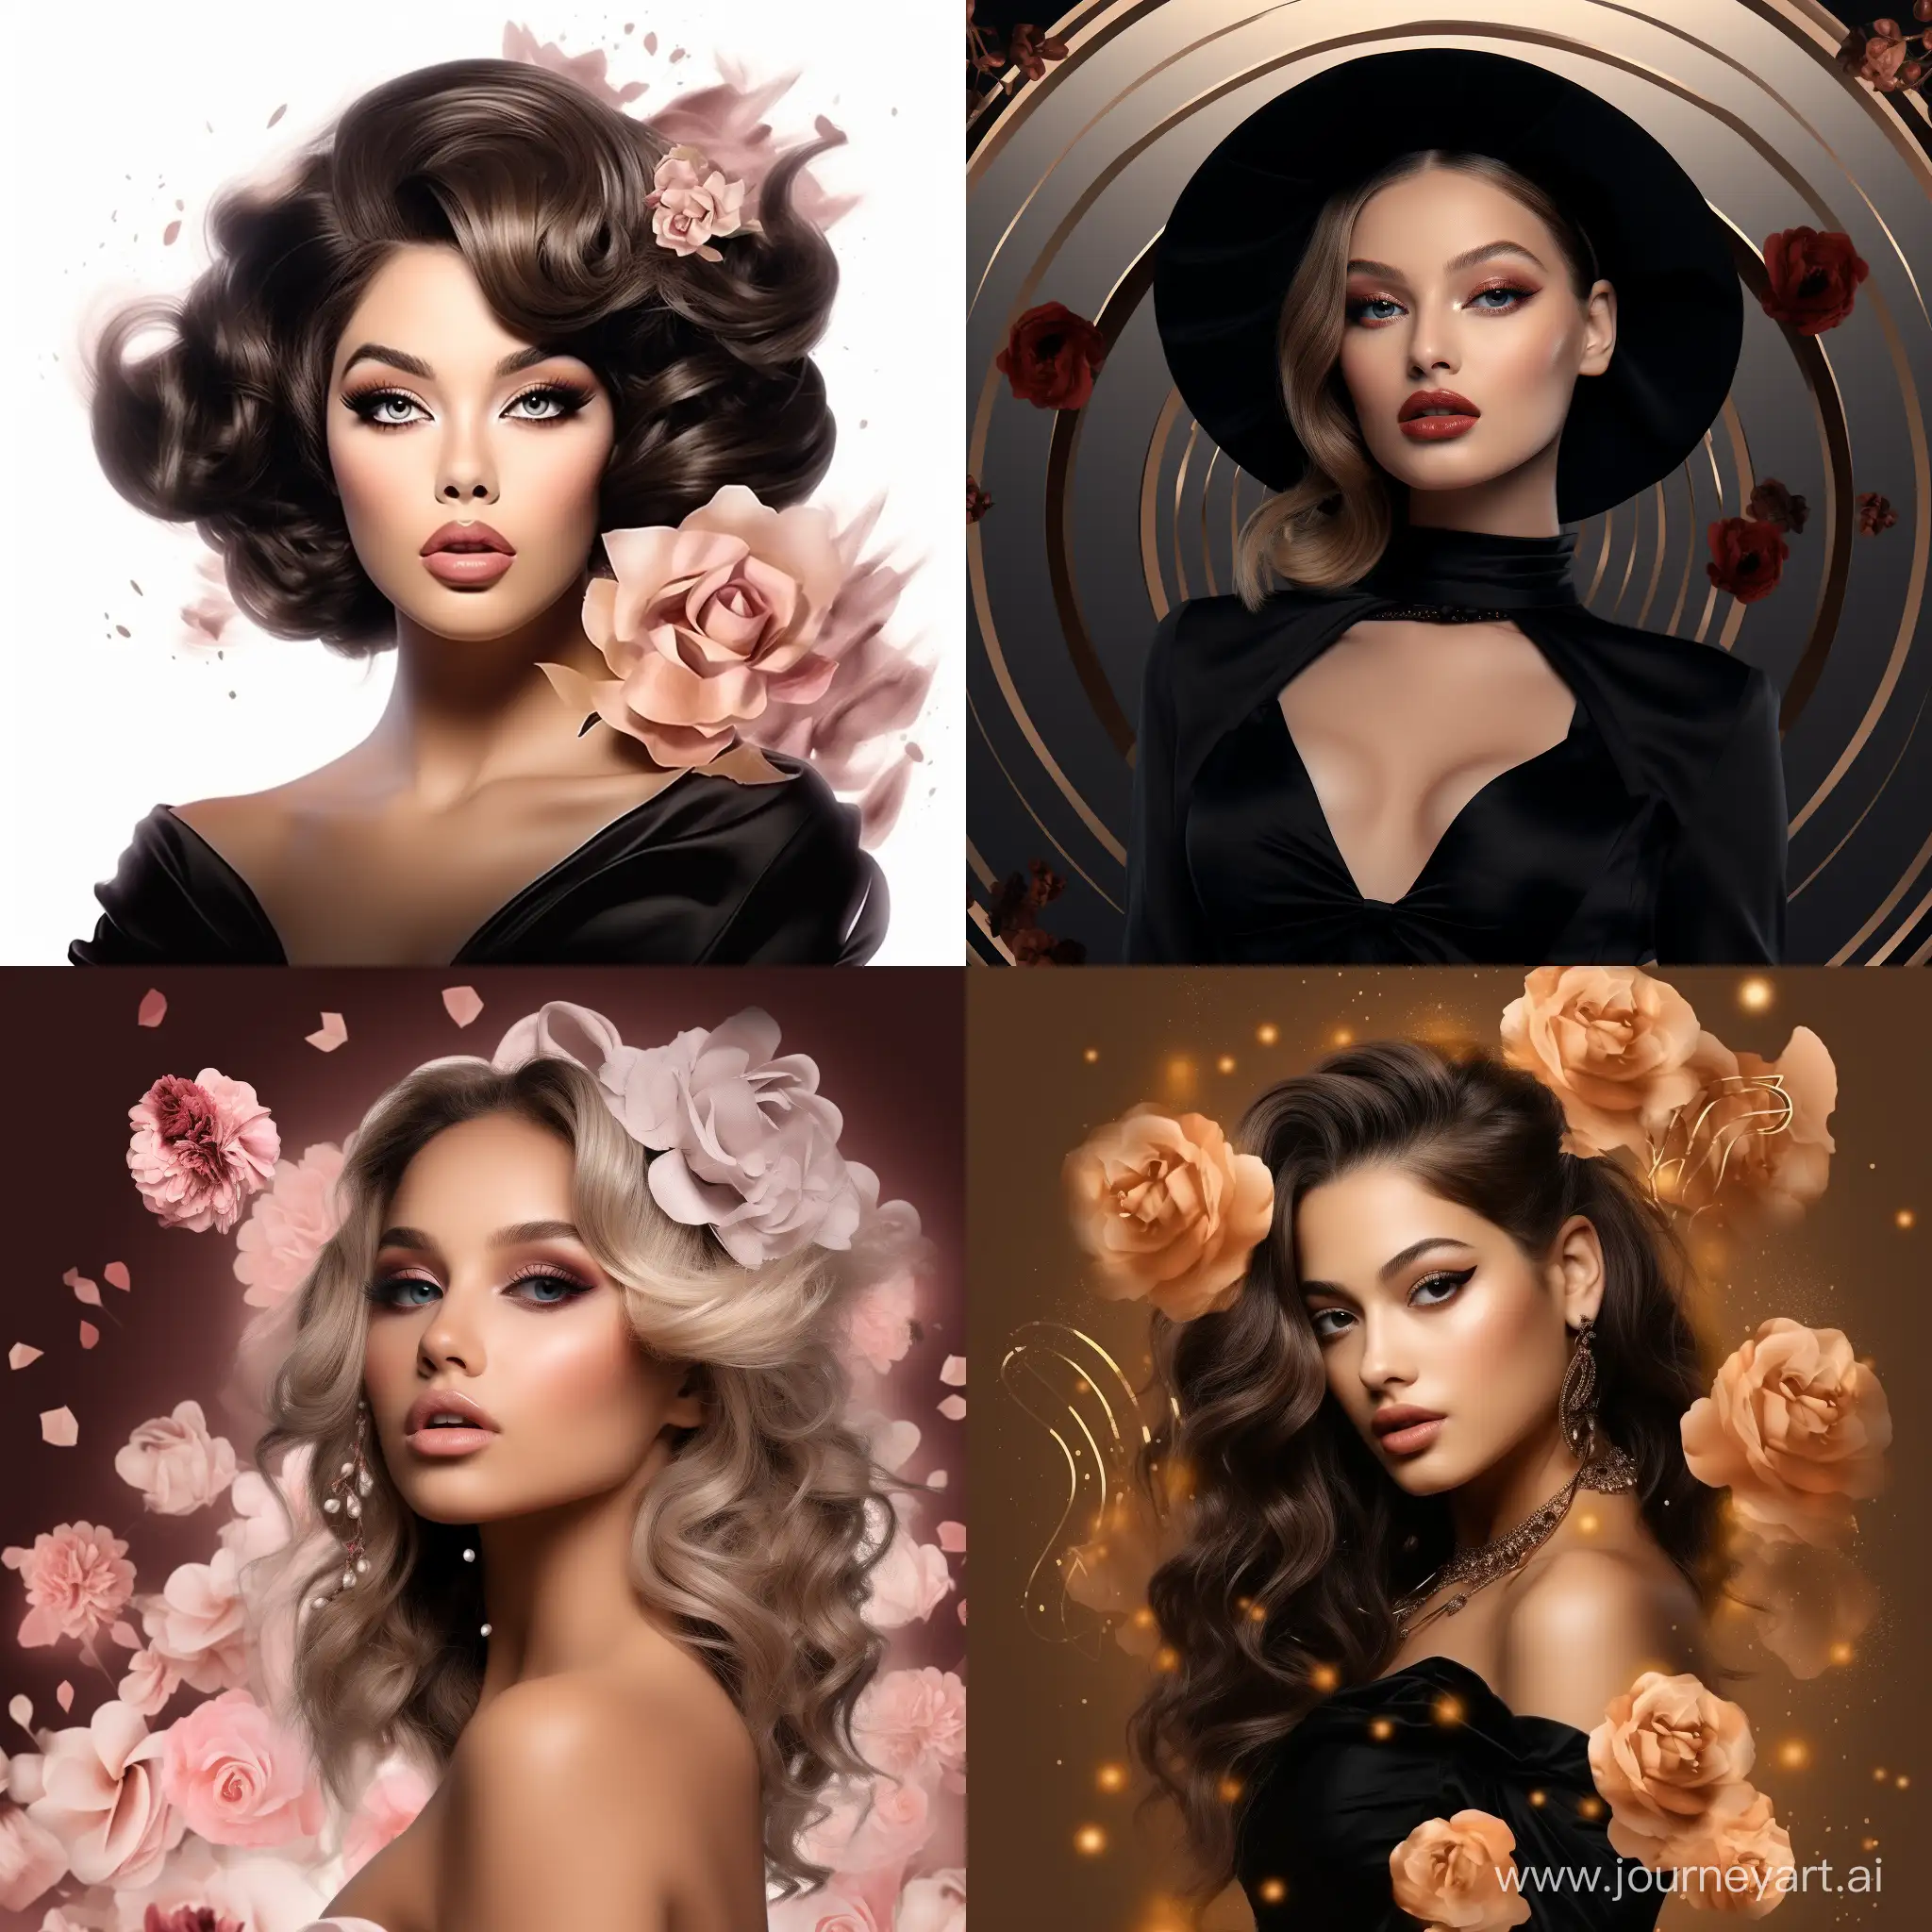 Elegant-Makeup-and-Fashion-Elegance-Glamorous-Women-in-a-11-Artistic-Rendering